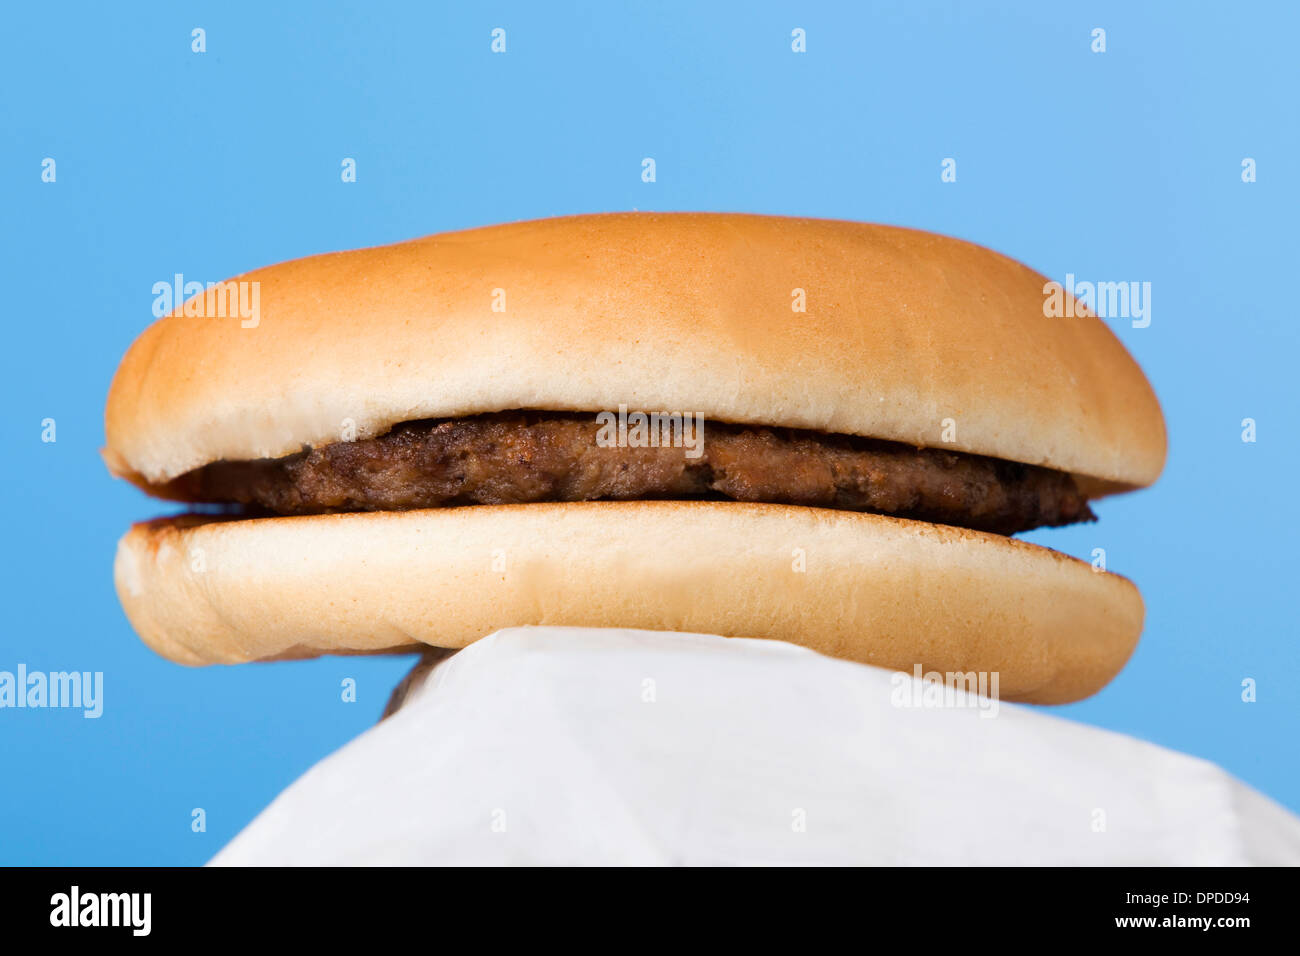 Plain hamburger hi-res stock photography and images - Alamy